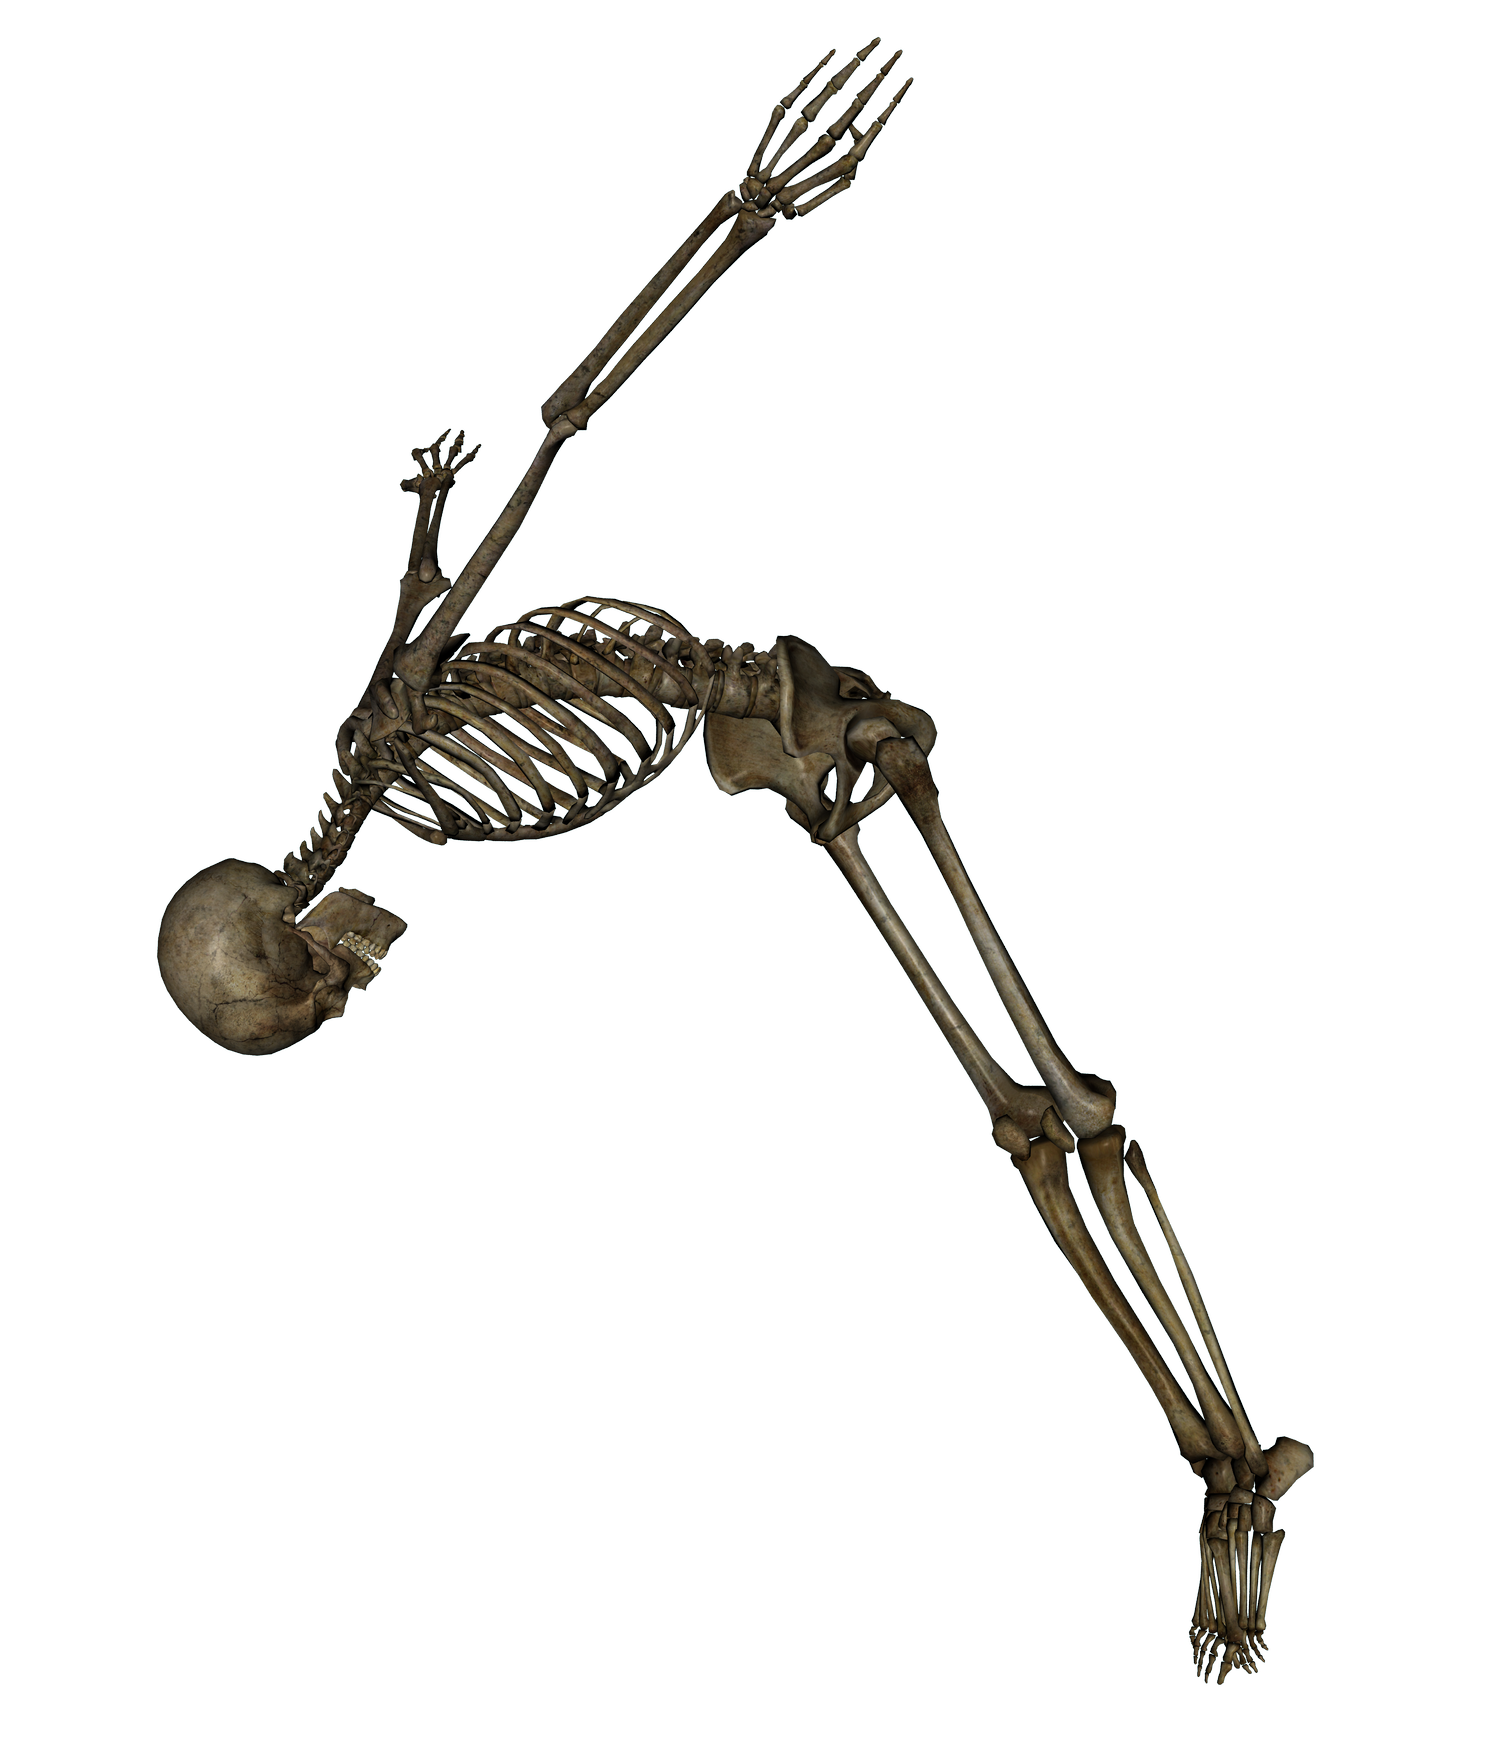 Skeleton Png Image PNG Image